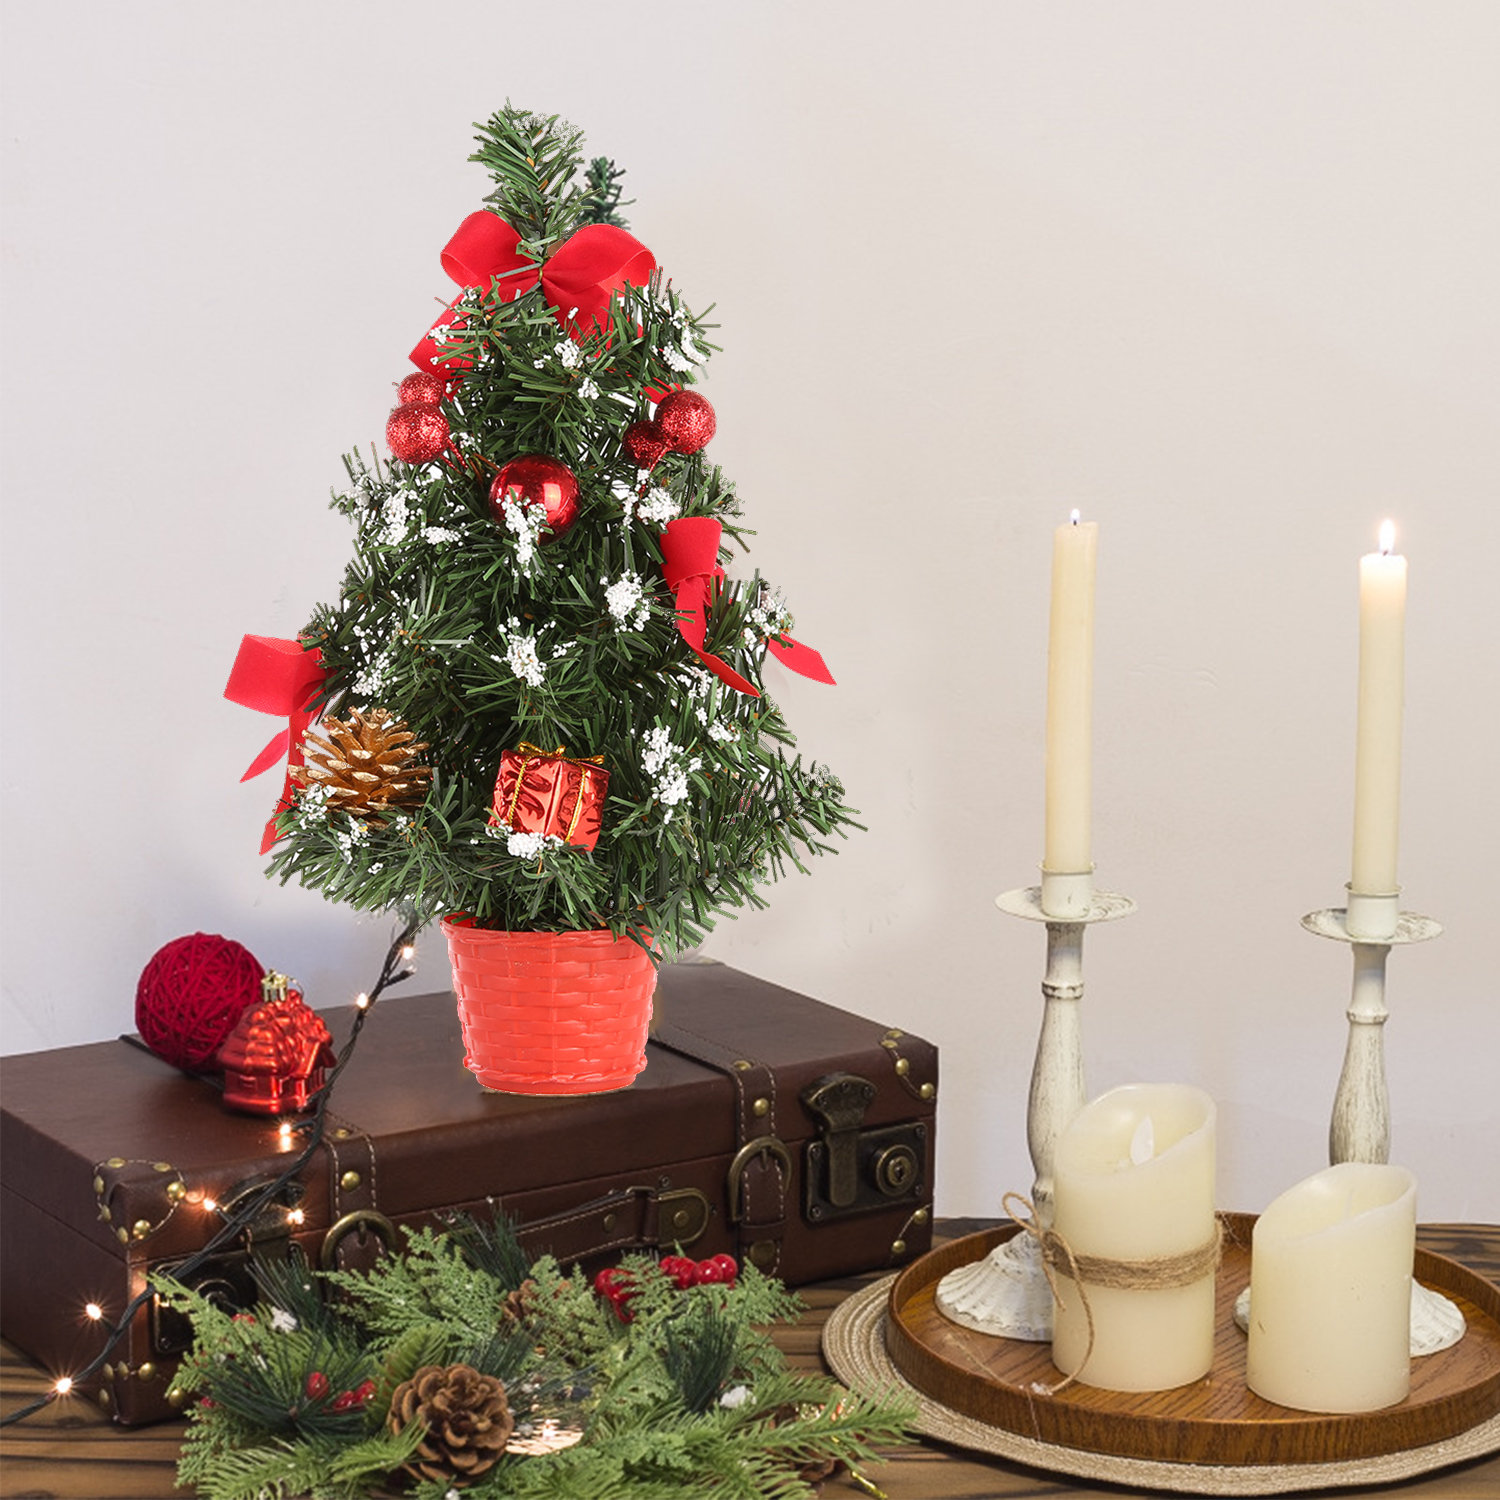 Miniature Christmas Decorations